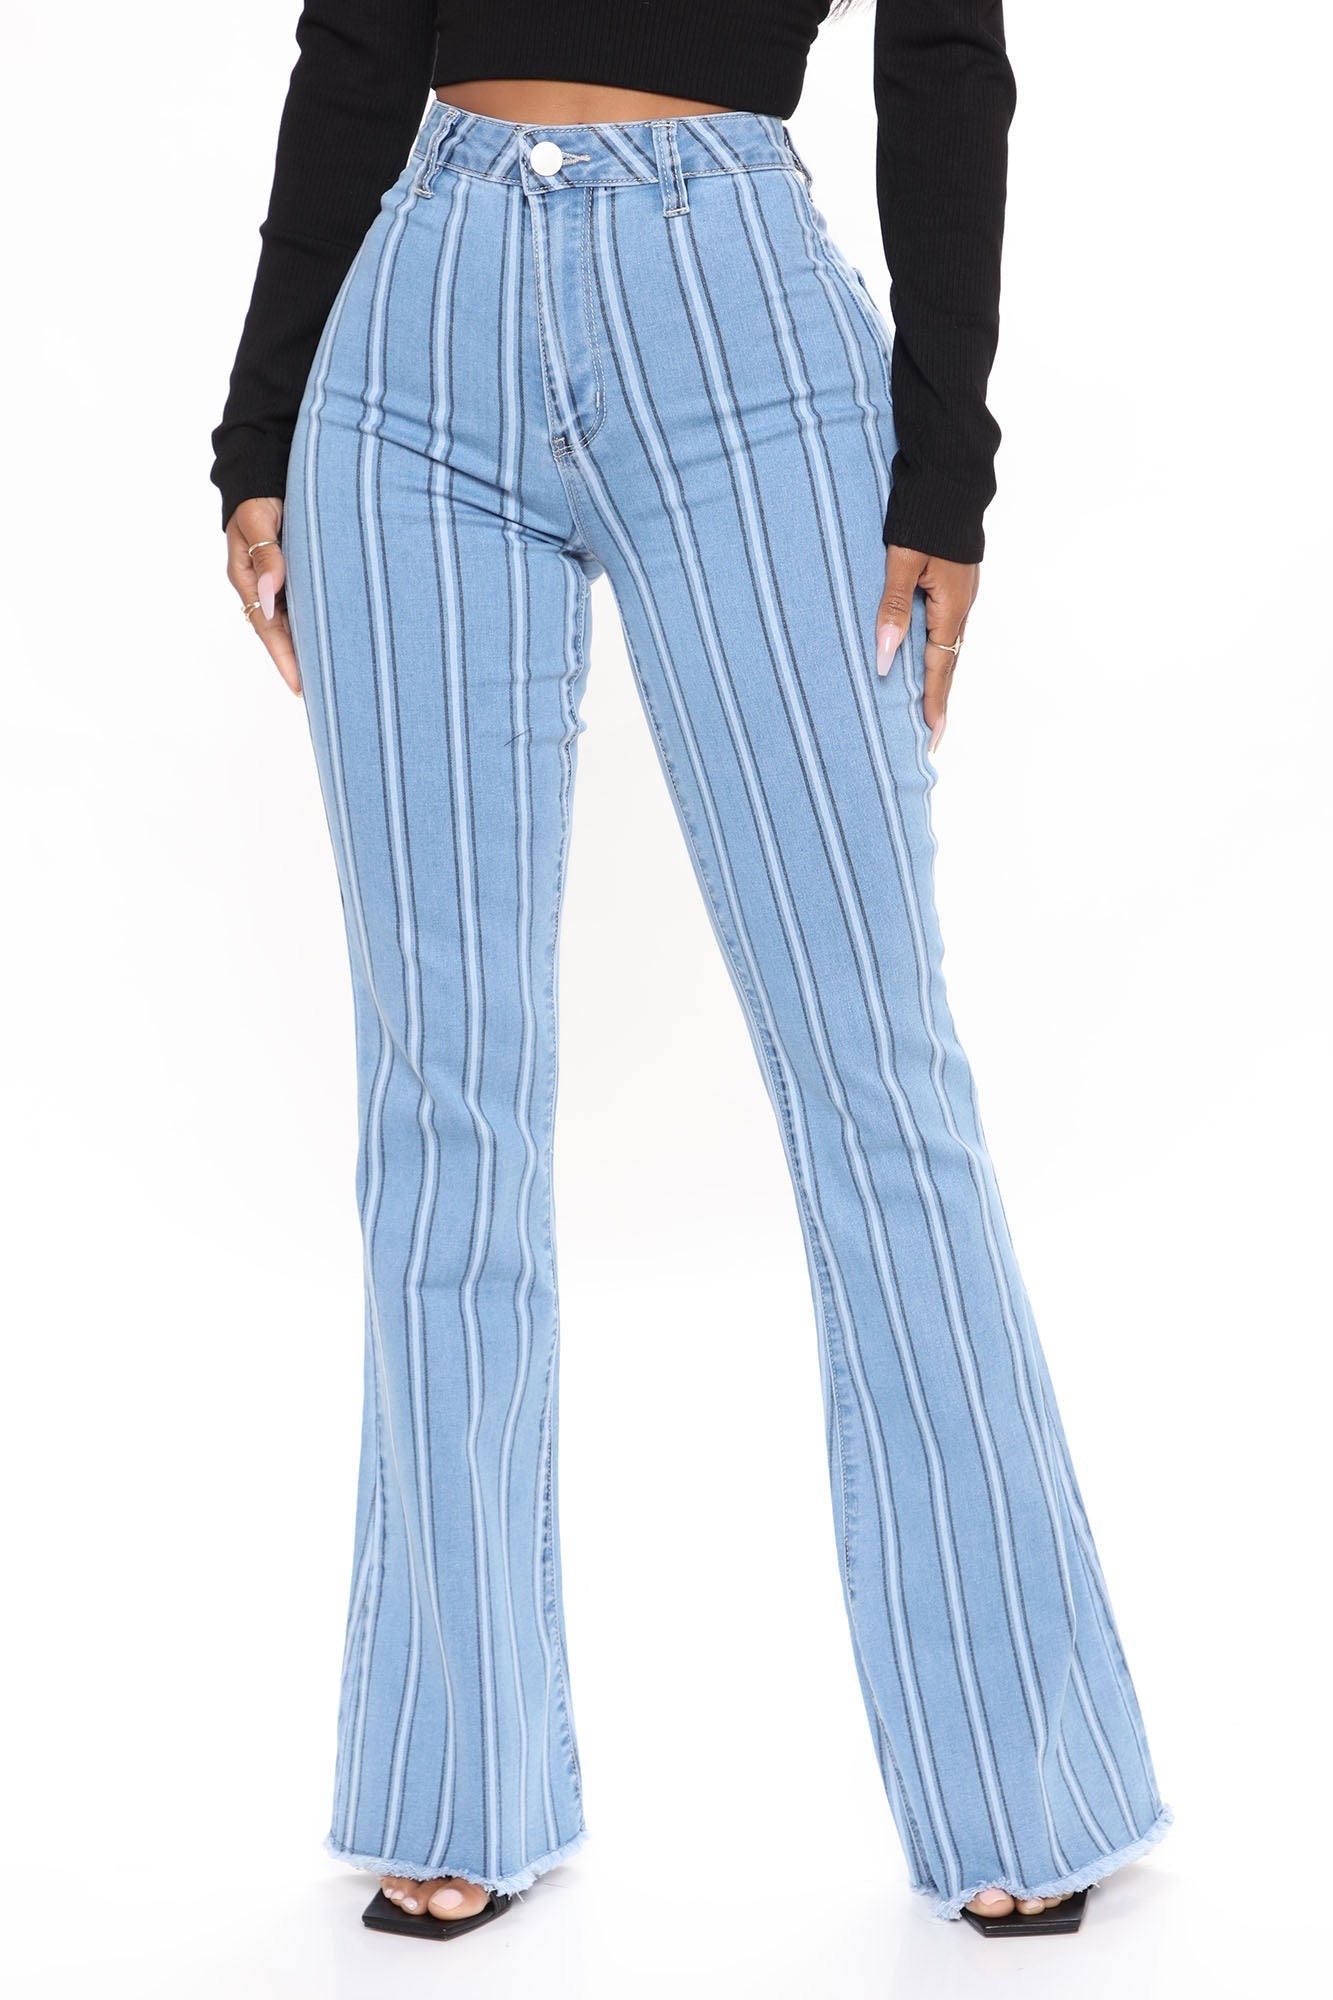 Valentina Stripe High Rise Flare Jeans - Medium Blue Wash